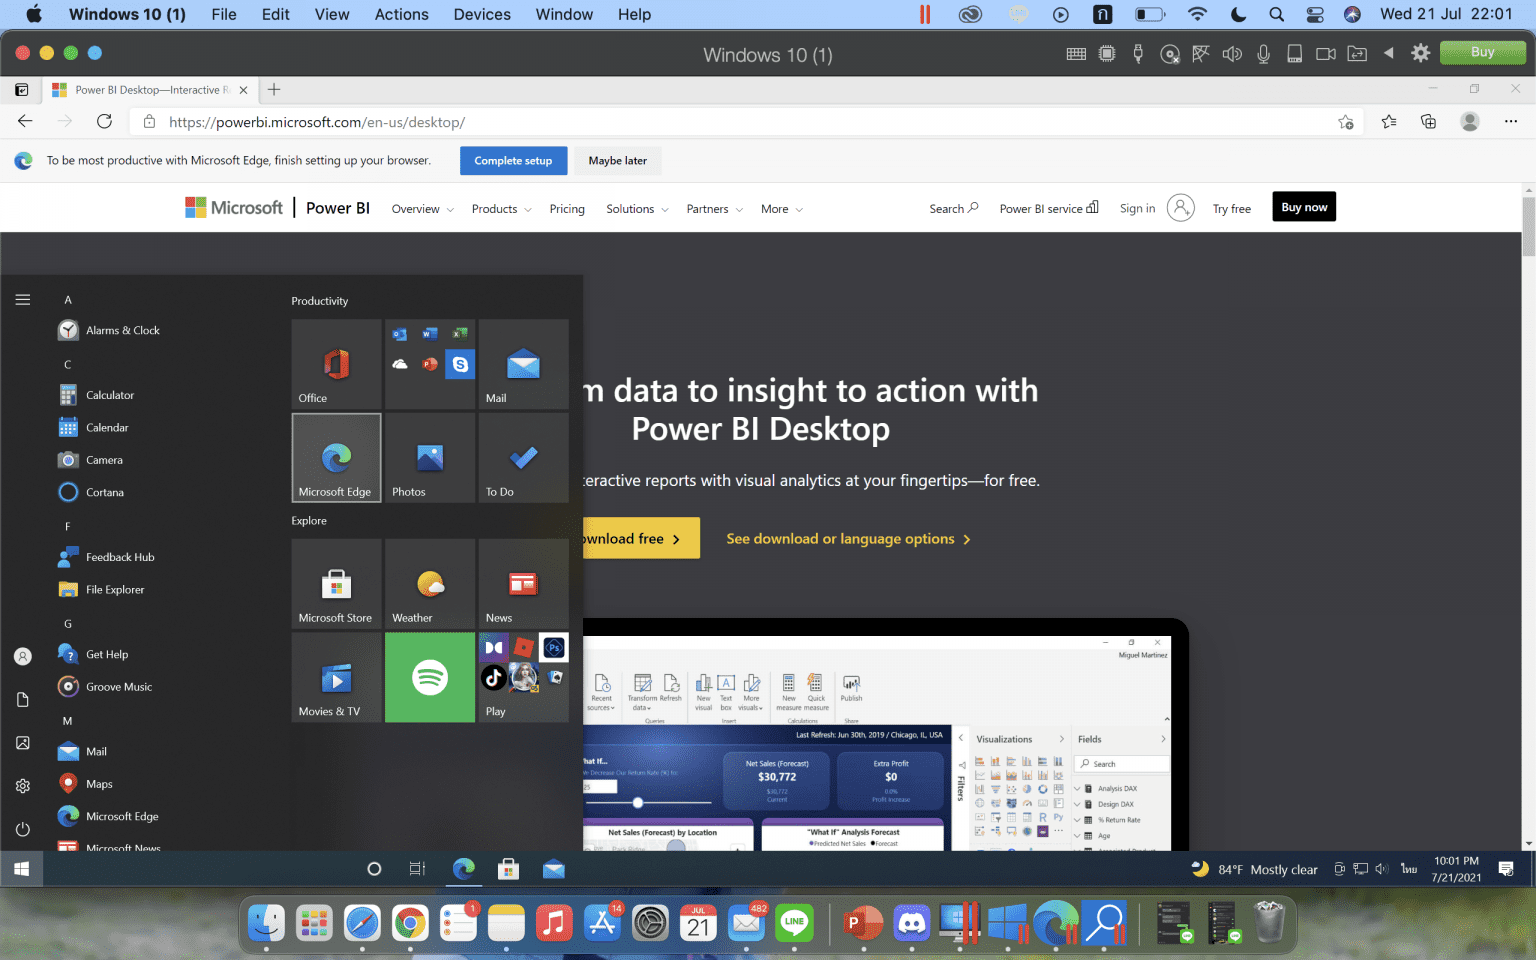 power bi desktop mac os download